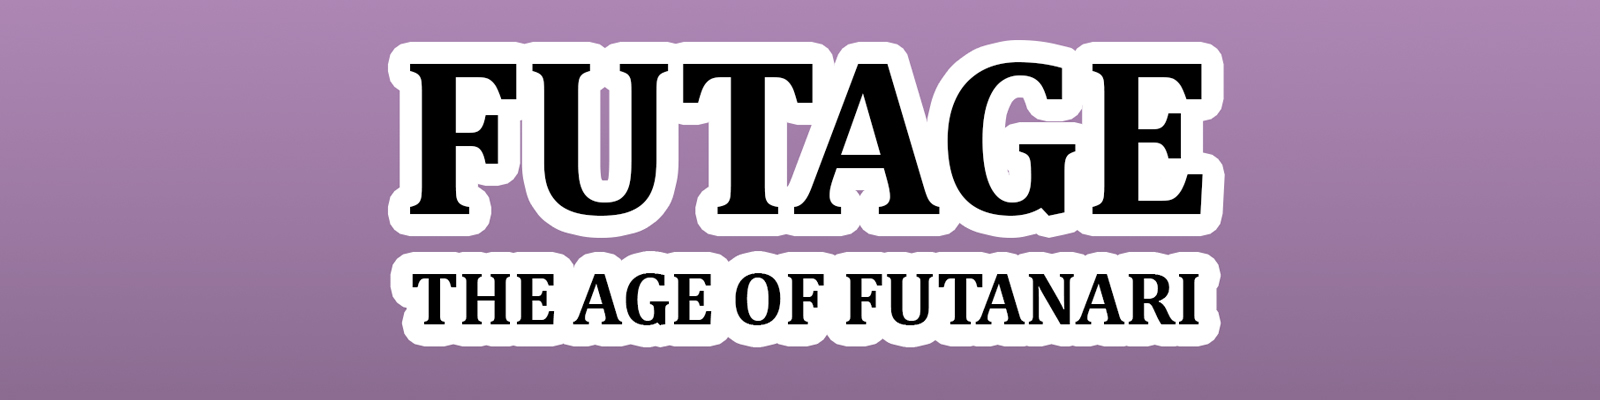 Futage: the age of futanari chapter 1